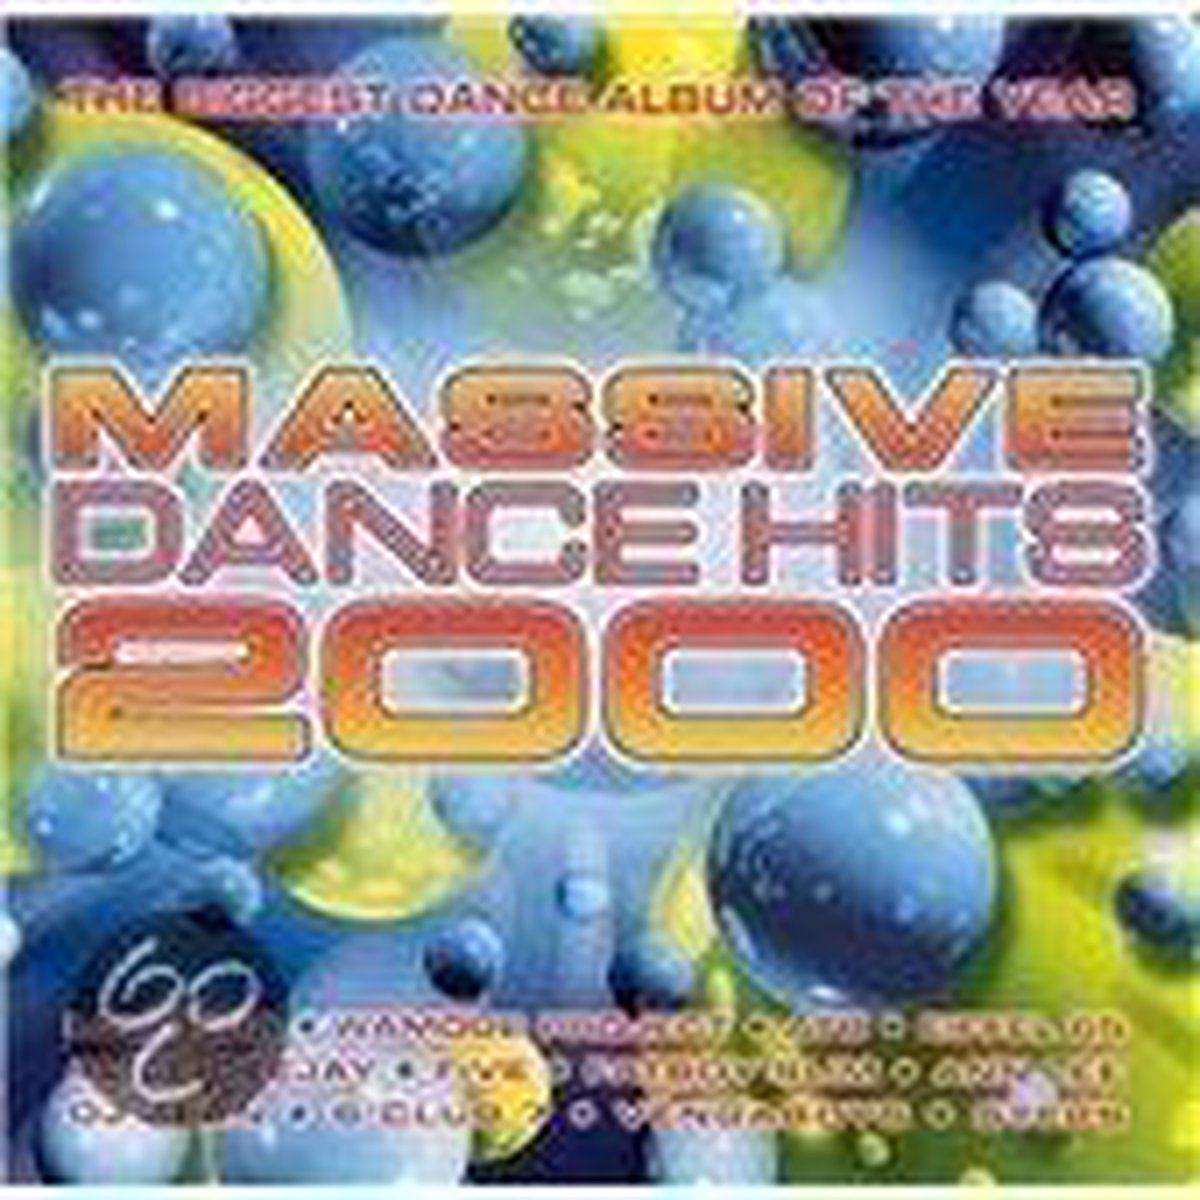 Massive Dance Hits 2000 - various artists